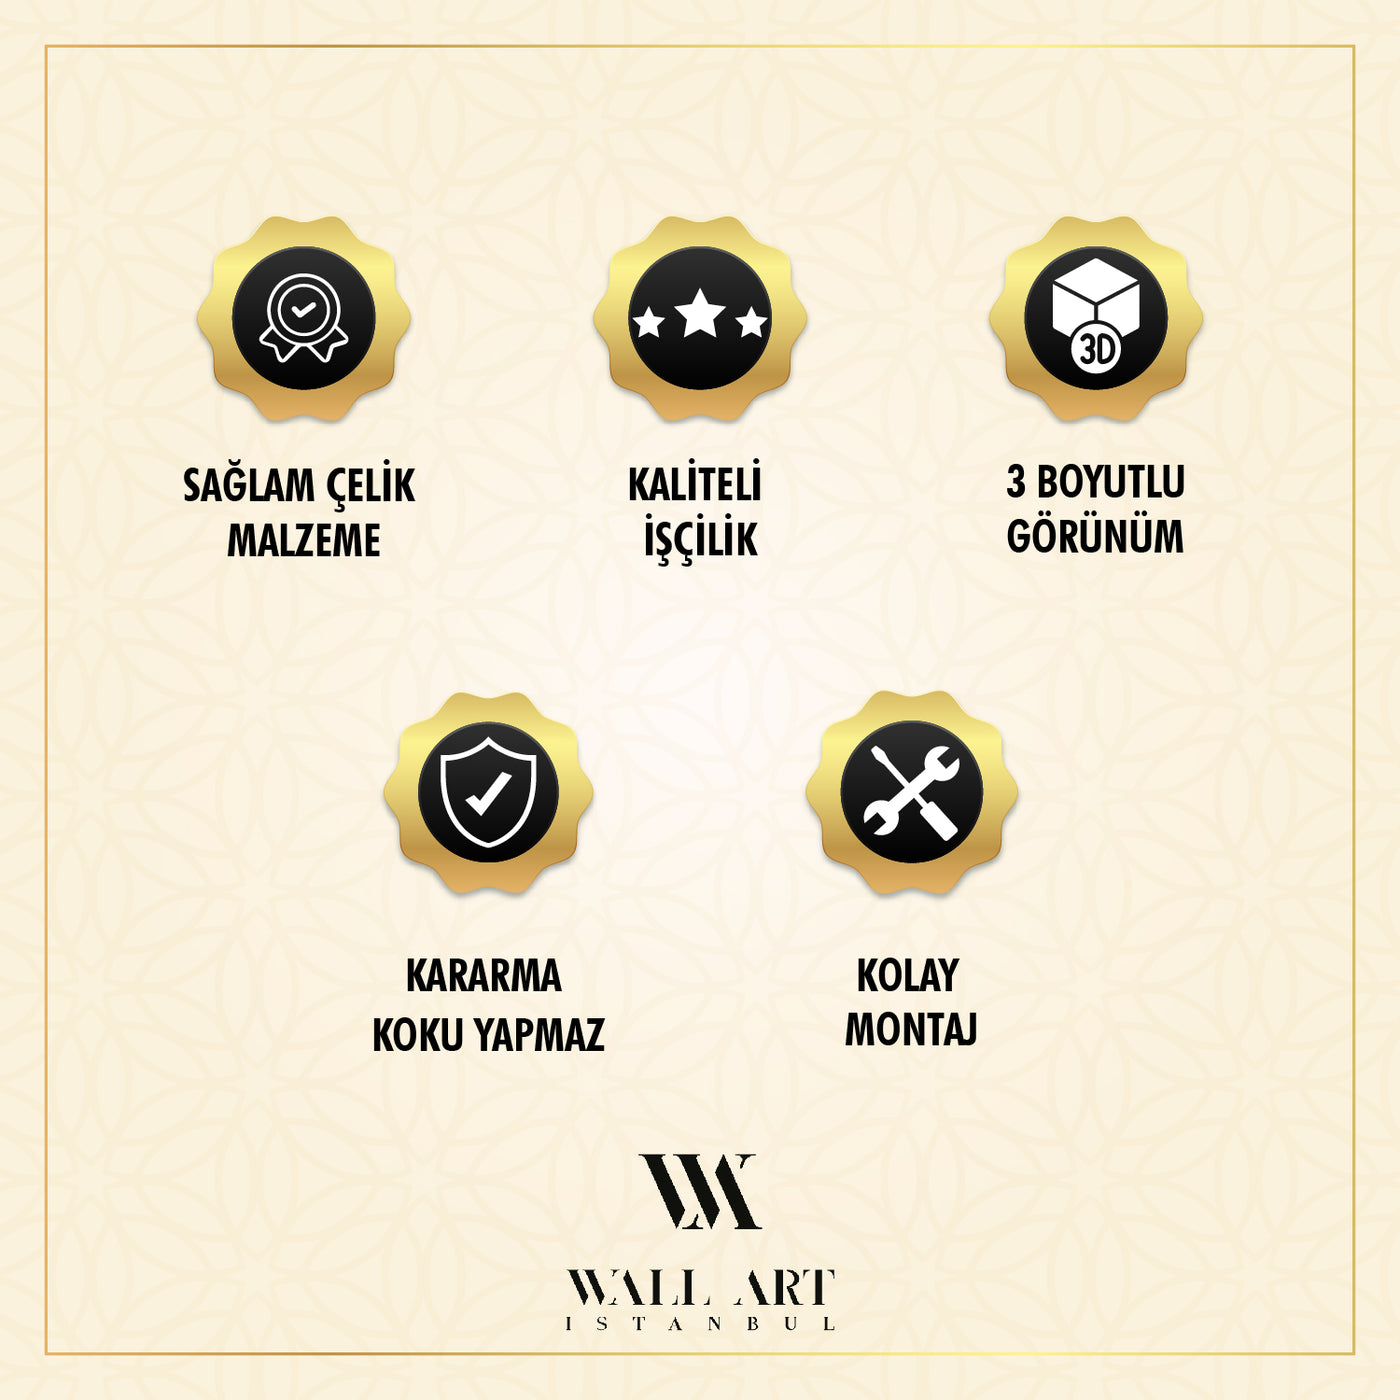 Drop Pattern Ayatul Kursi Metal Islamic Wall Art - WAM152